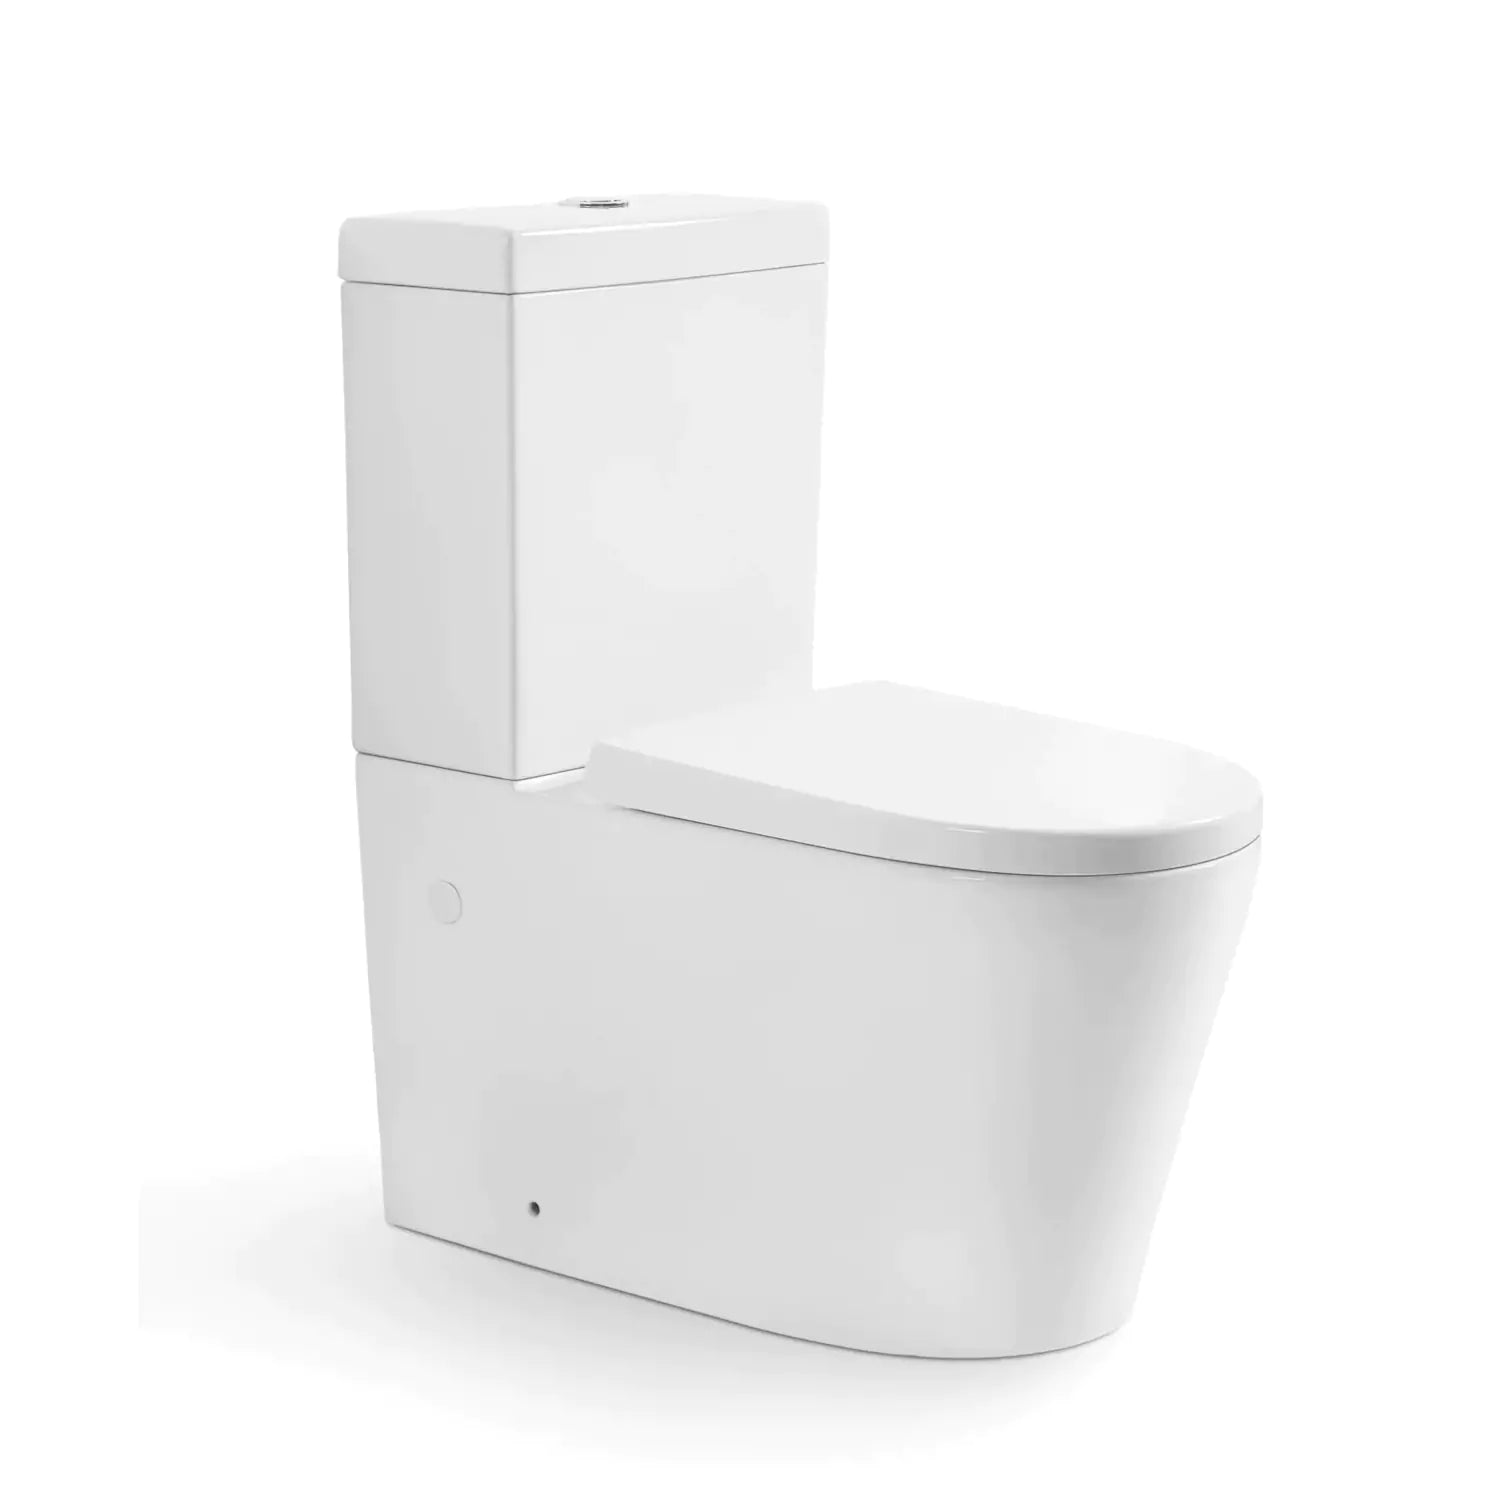 Gloss white Avery BTW toilet suite, sleek and modern design-KDK002C/KDK002P